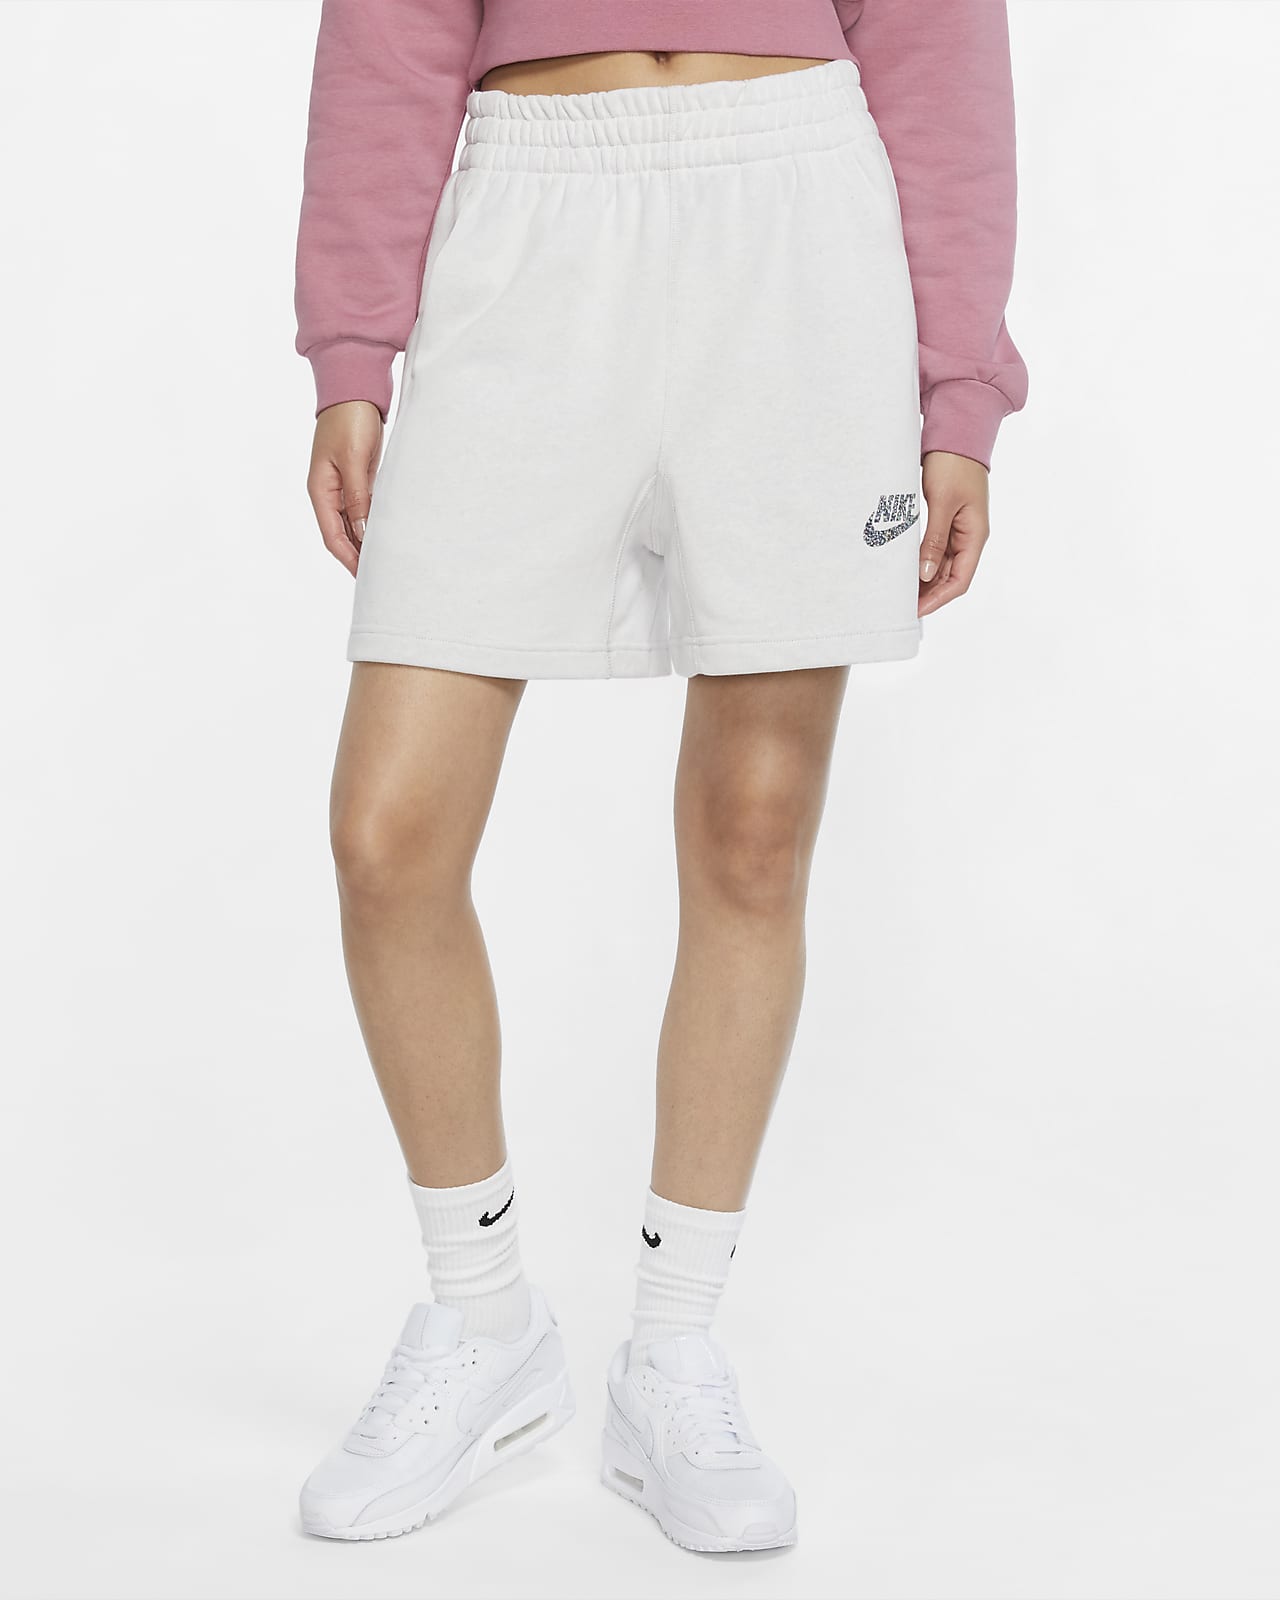 Nike Sportswear Women's Shorts. Nike EG